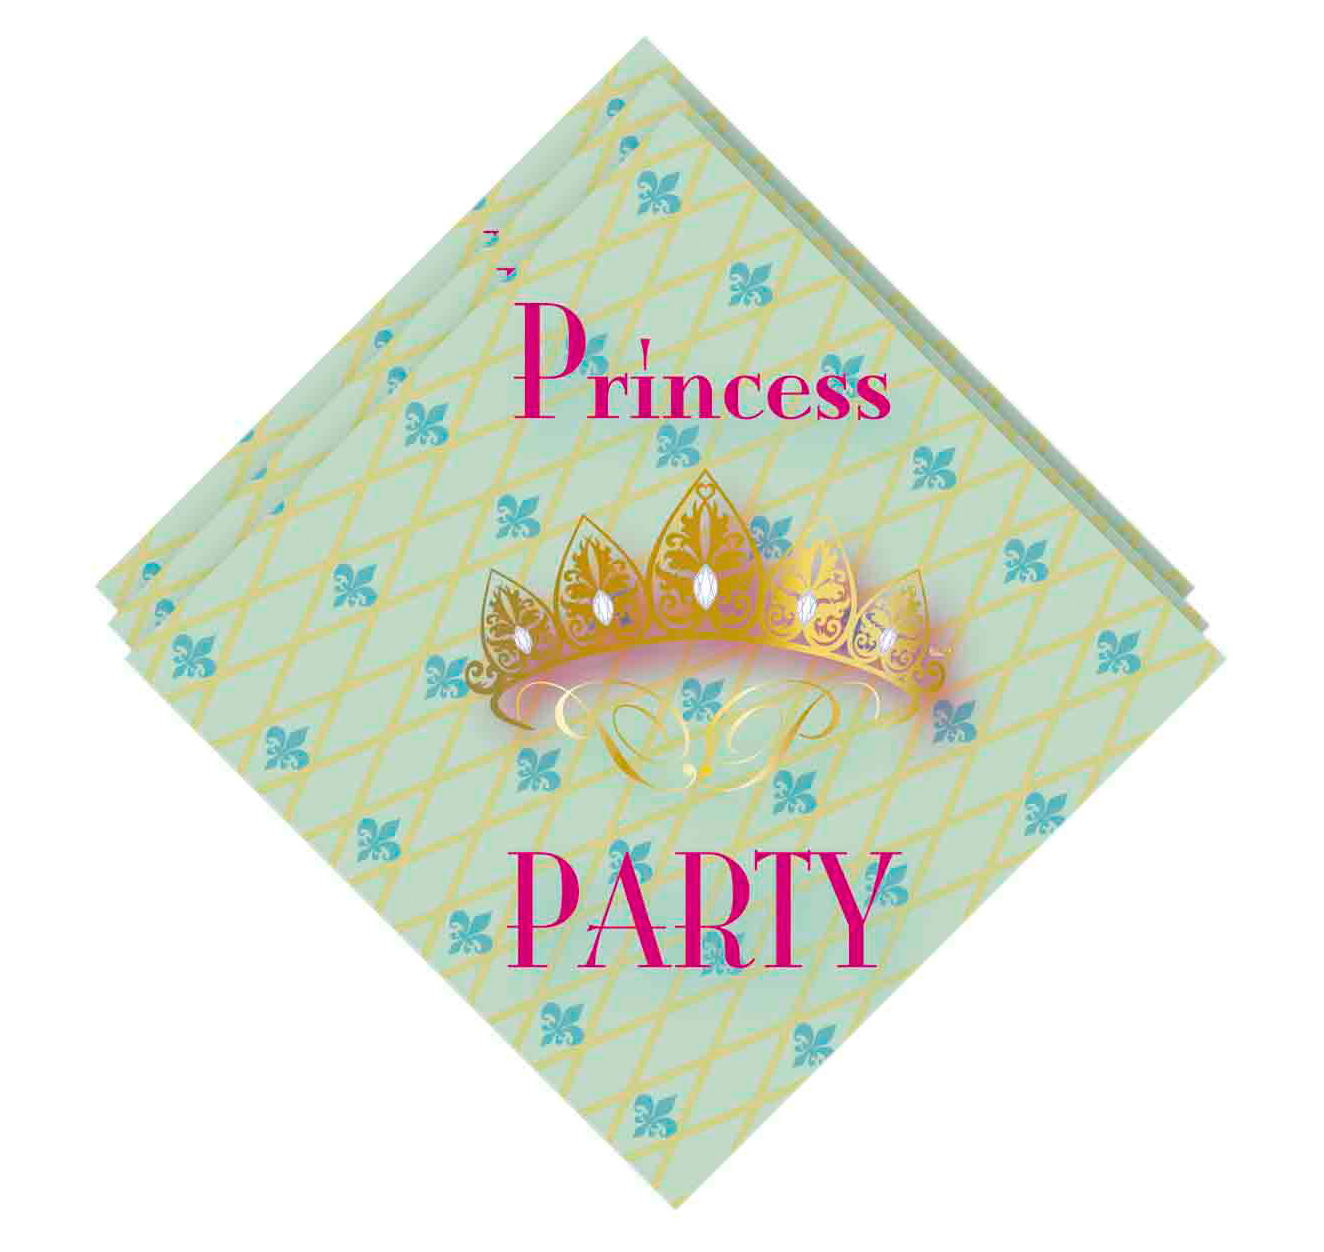 Servetten Princess Party